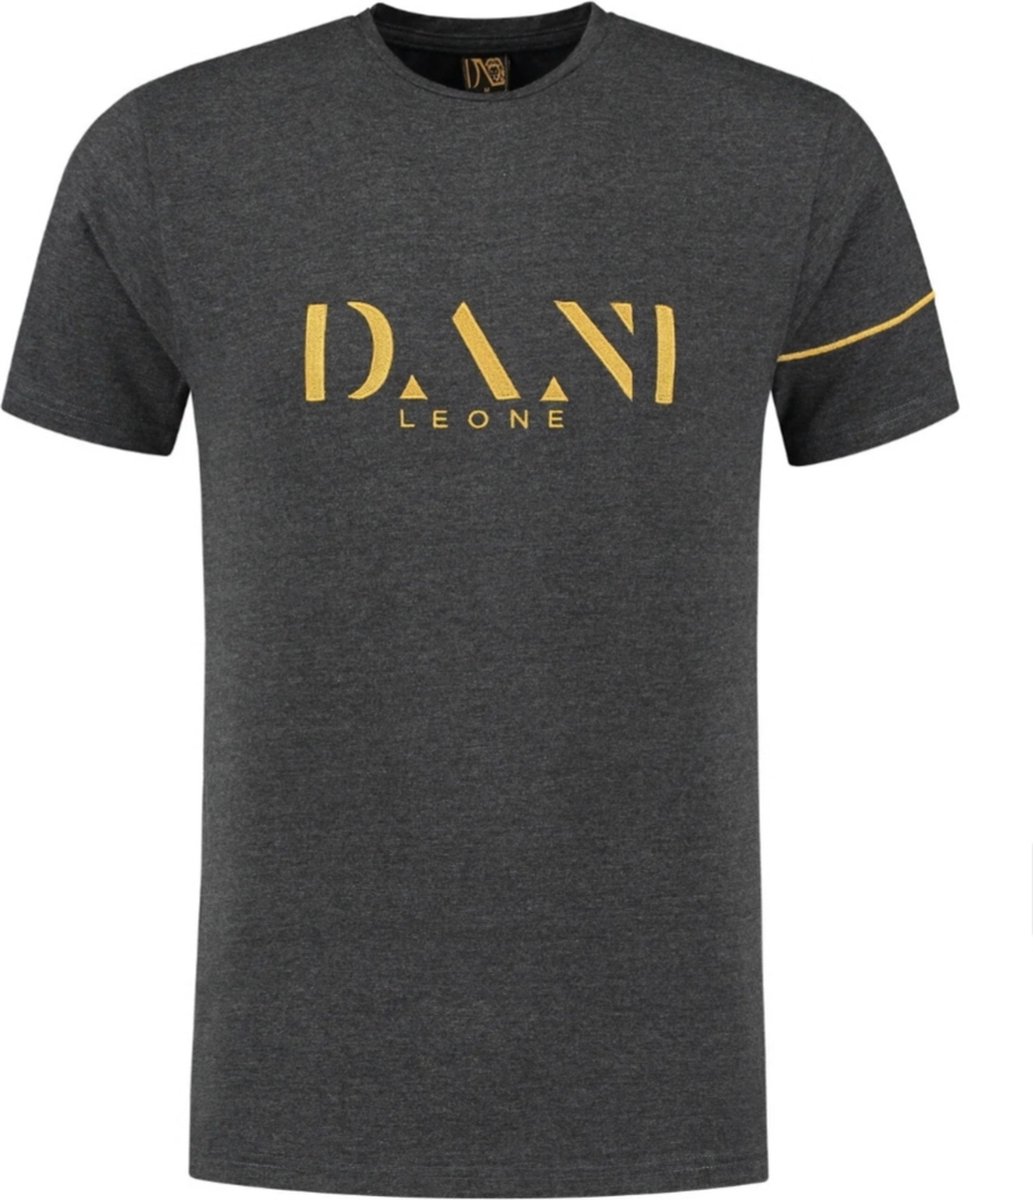 Dani leone t-shirt gold edition (L) grey